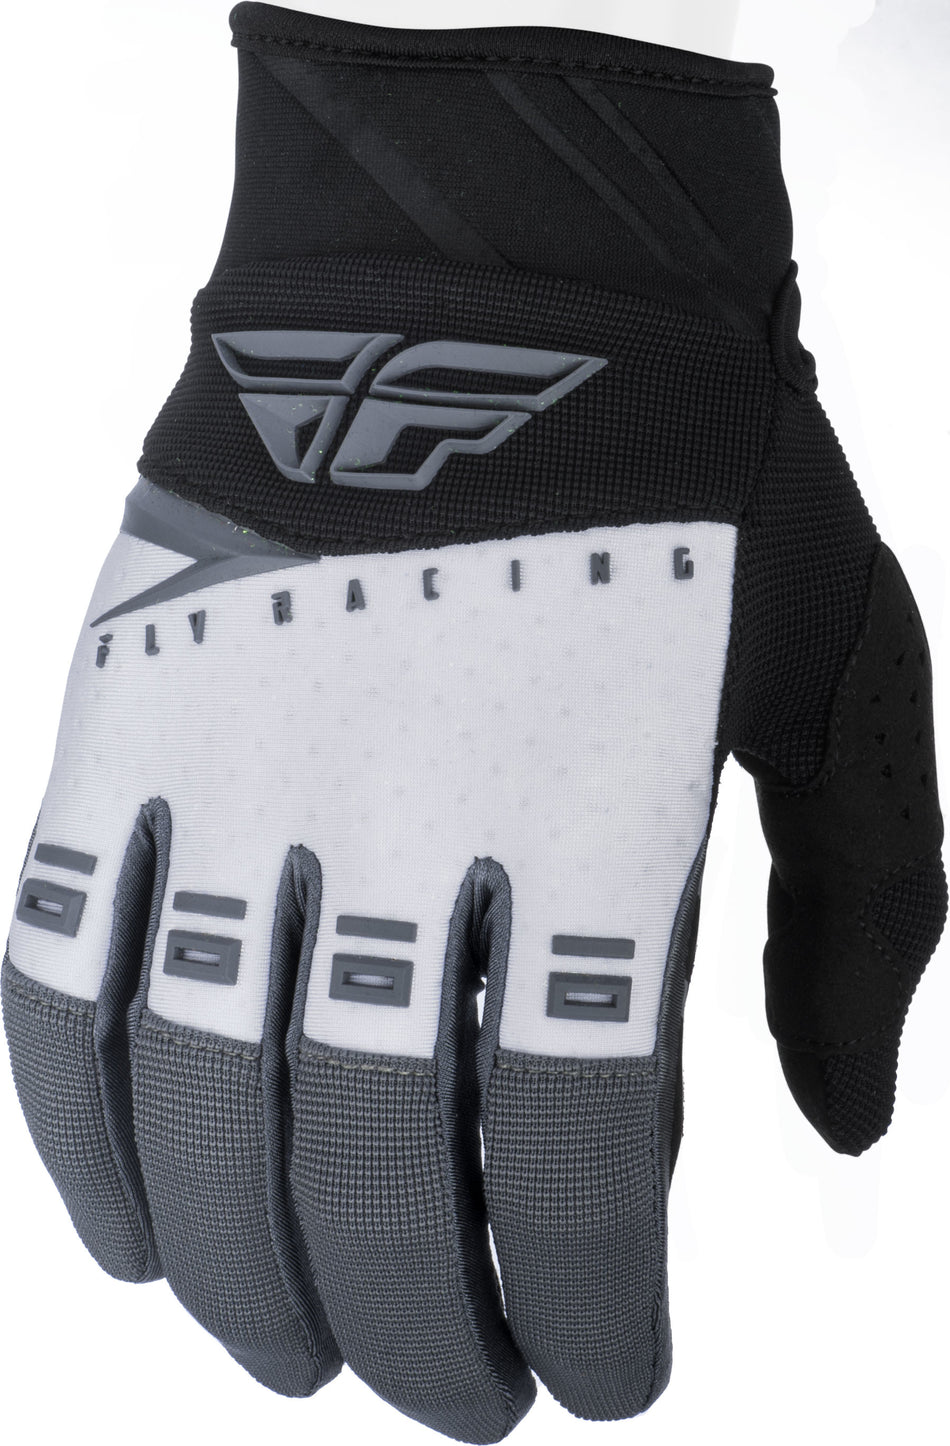 FLY RACING F-16 Gloves Black/White/Grey Sz 05 372-91005